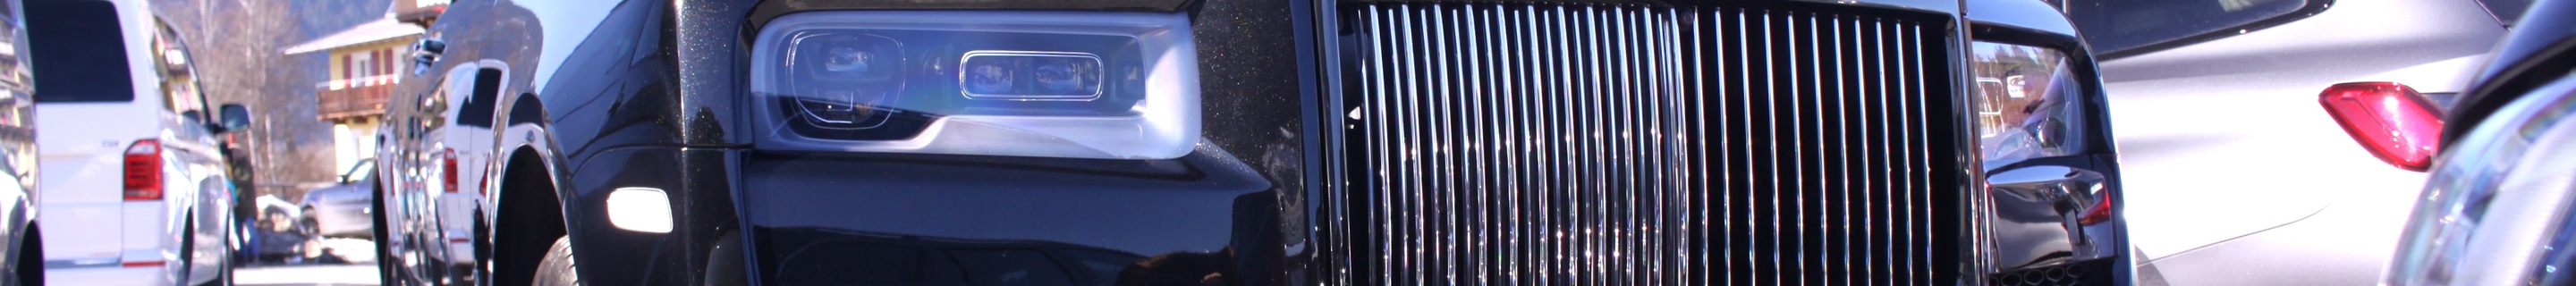 Rolls-Royce Cullinan Black Badge